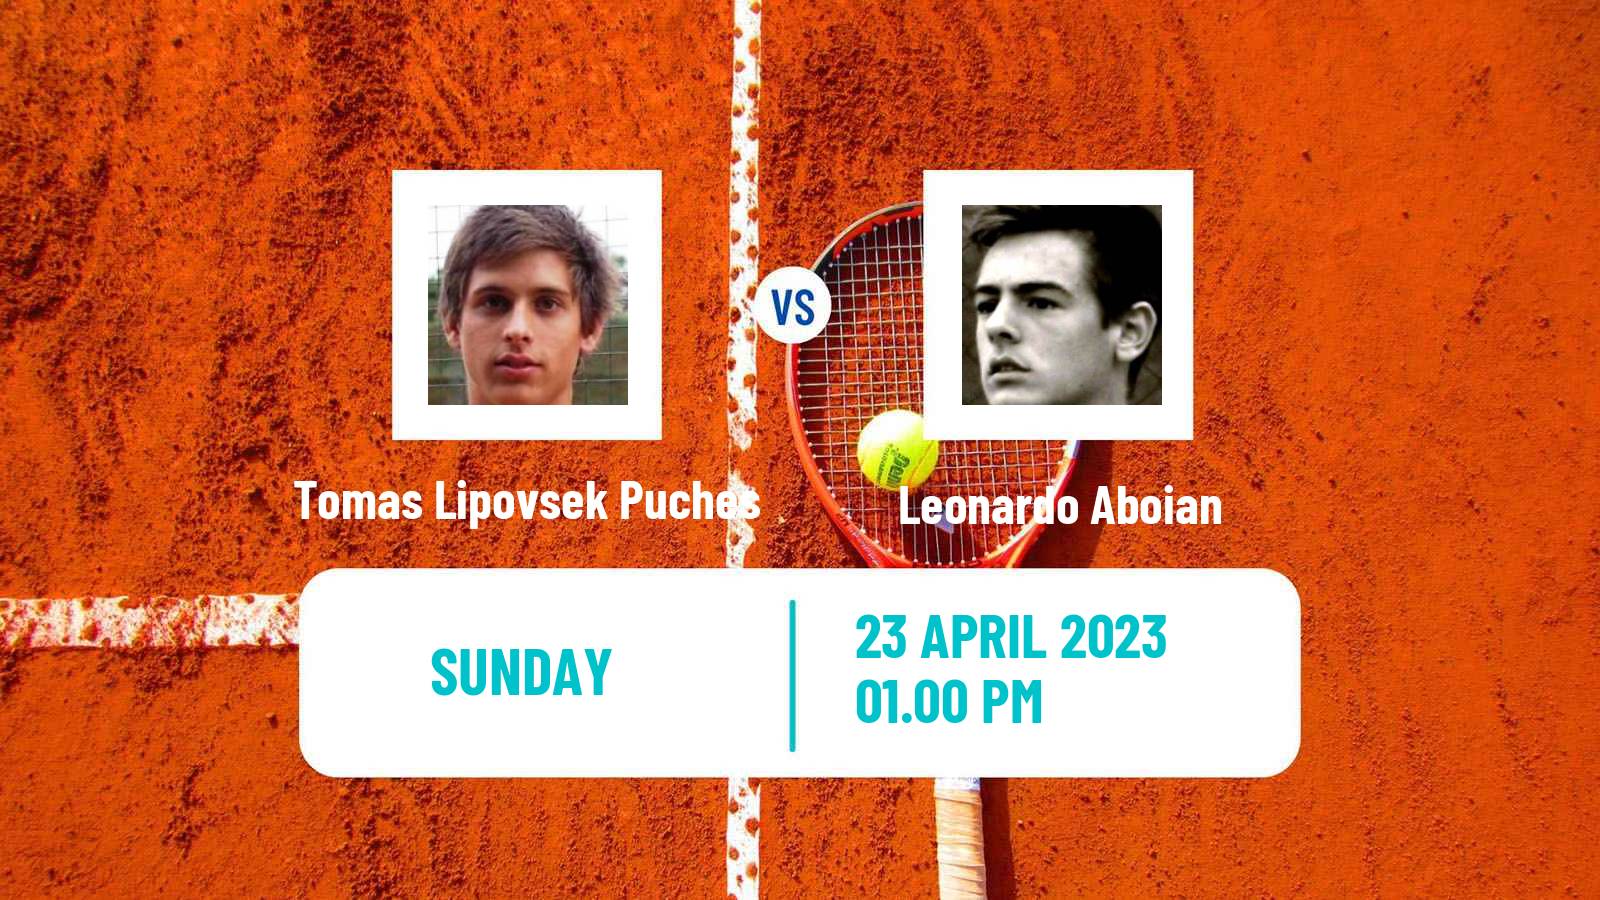 Tennis ATP Challenger Tomas Lipovsek Puches - Leonardo Aboian